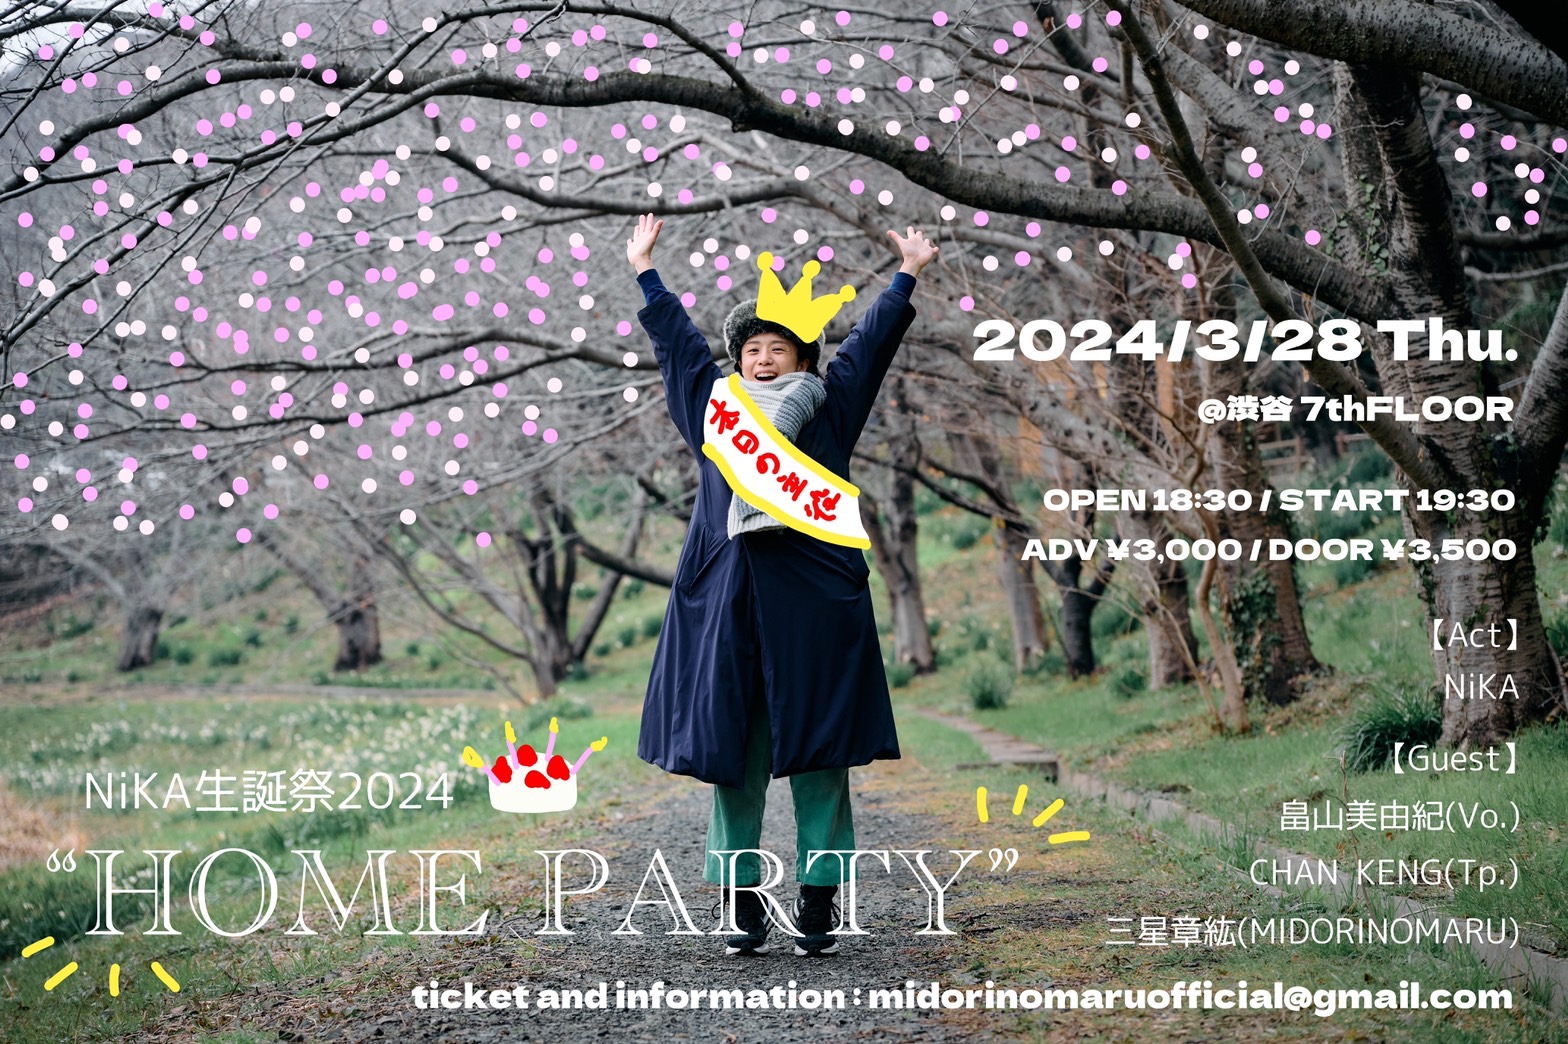 NiKA生誕祭2024 “HOME PARTY”